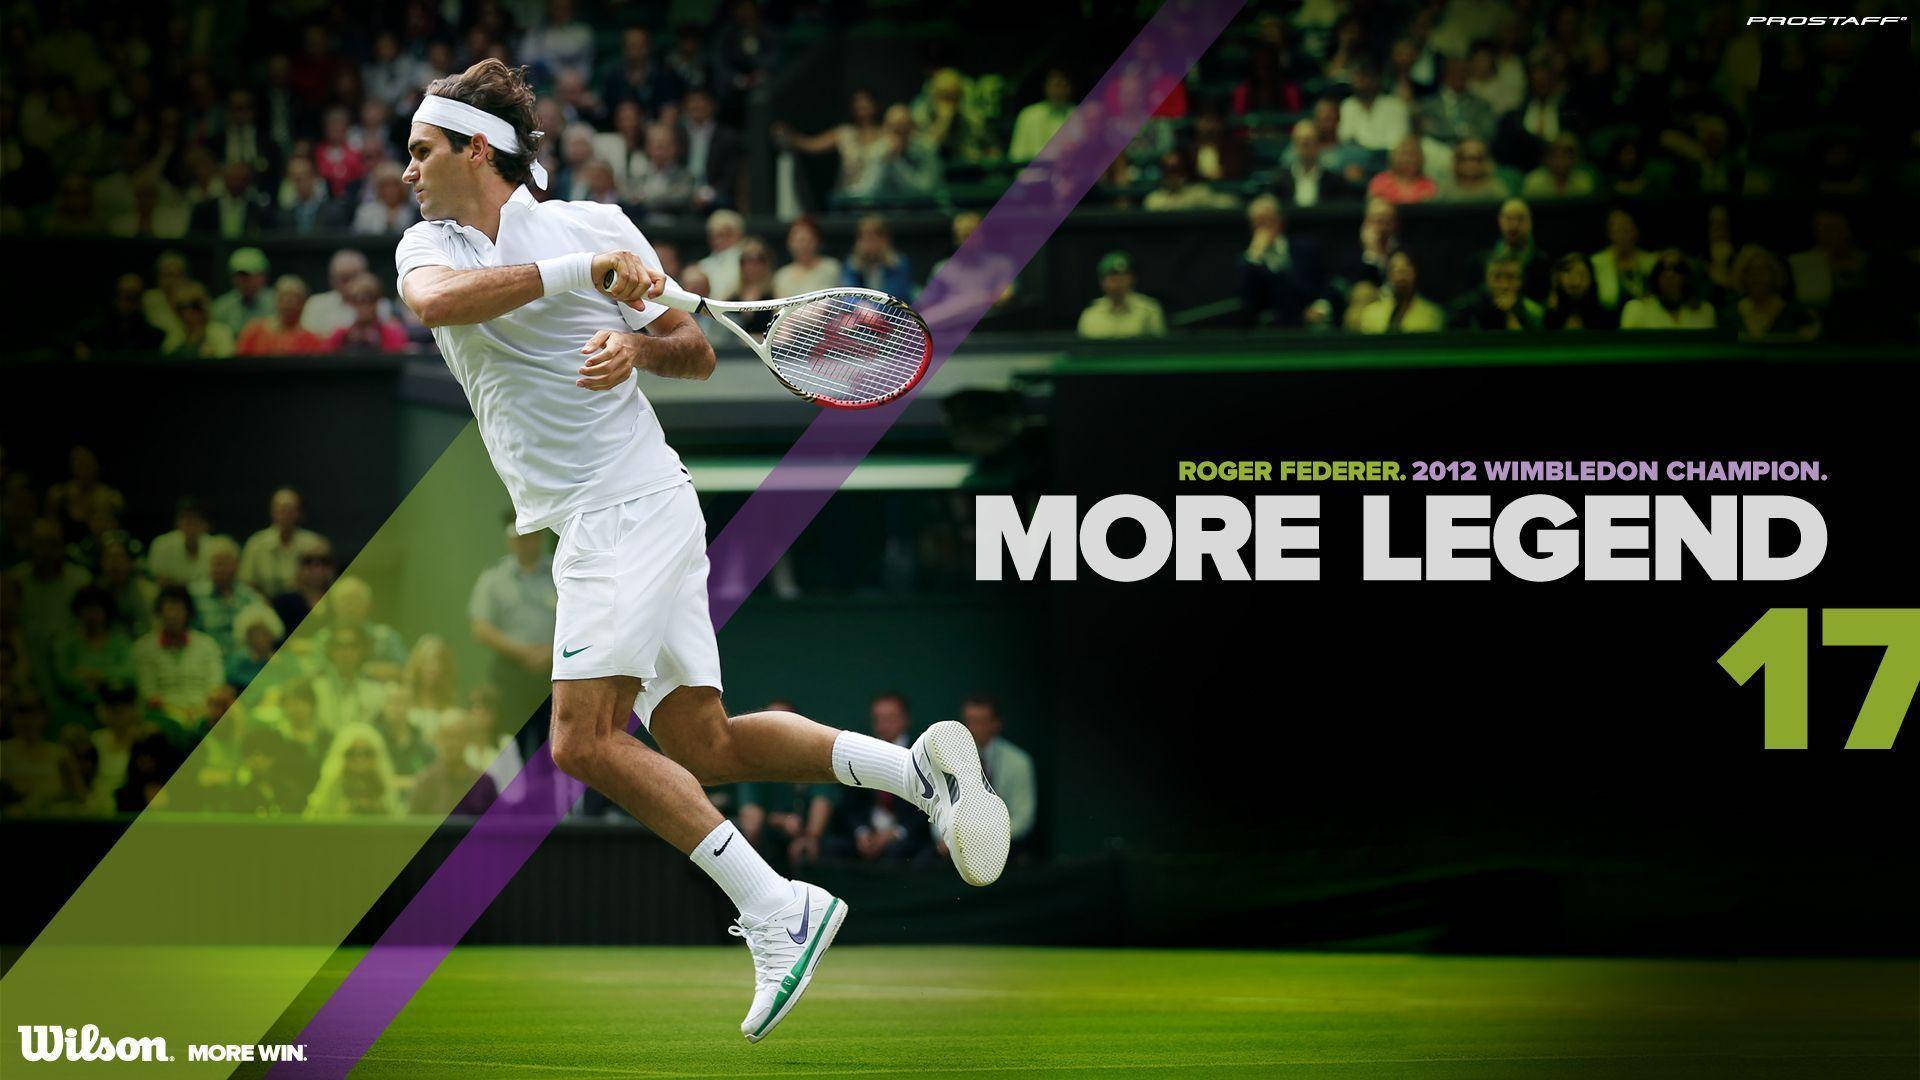 Top 999+ Wimbledon Wallpaper Full HD, 4K✅Free to Use